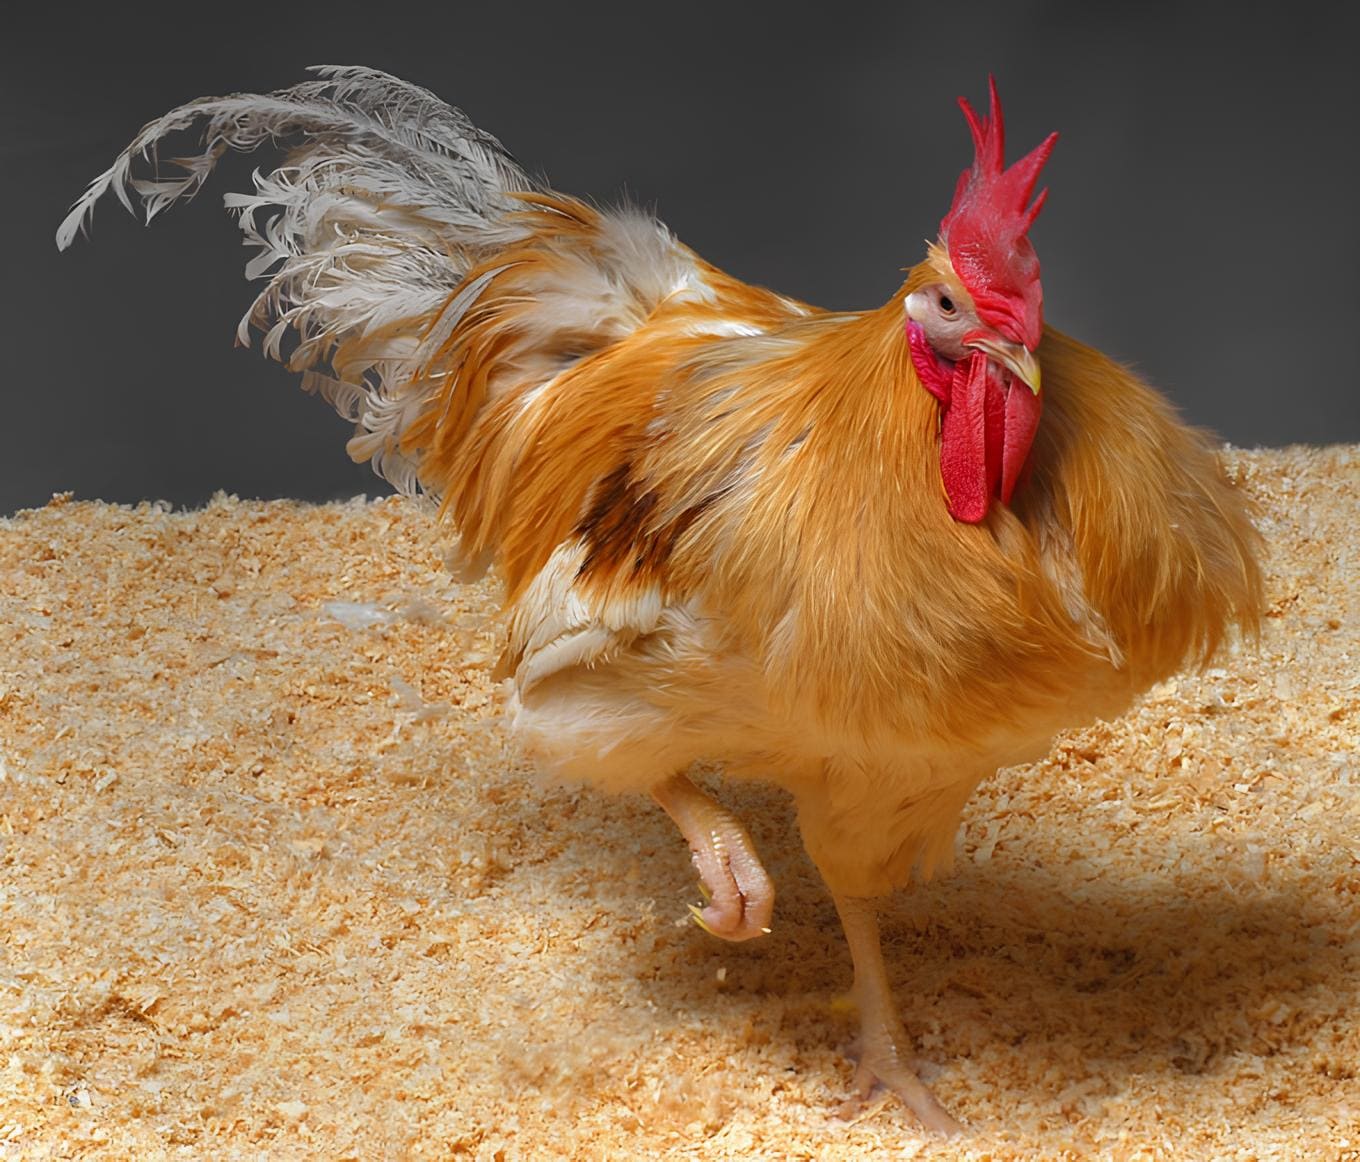 Modified Chickens Can’t Transmit Bird Flu